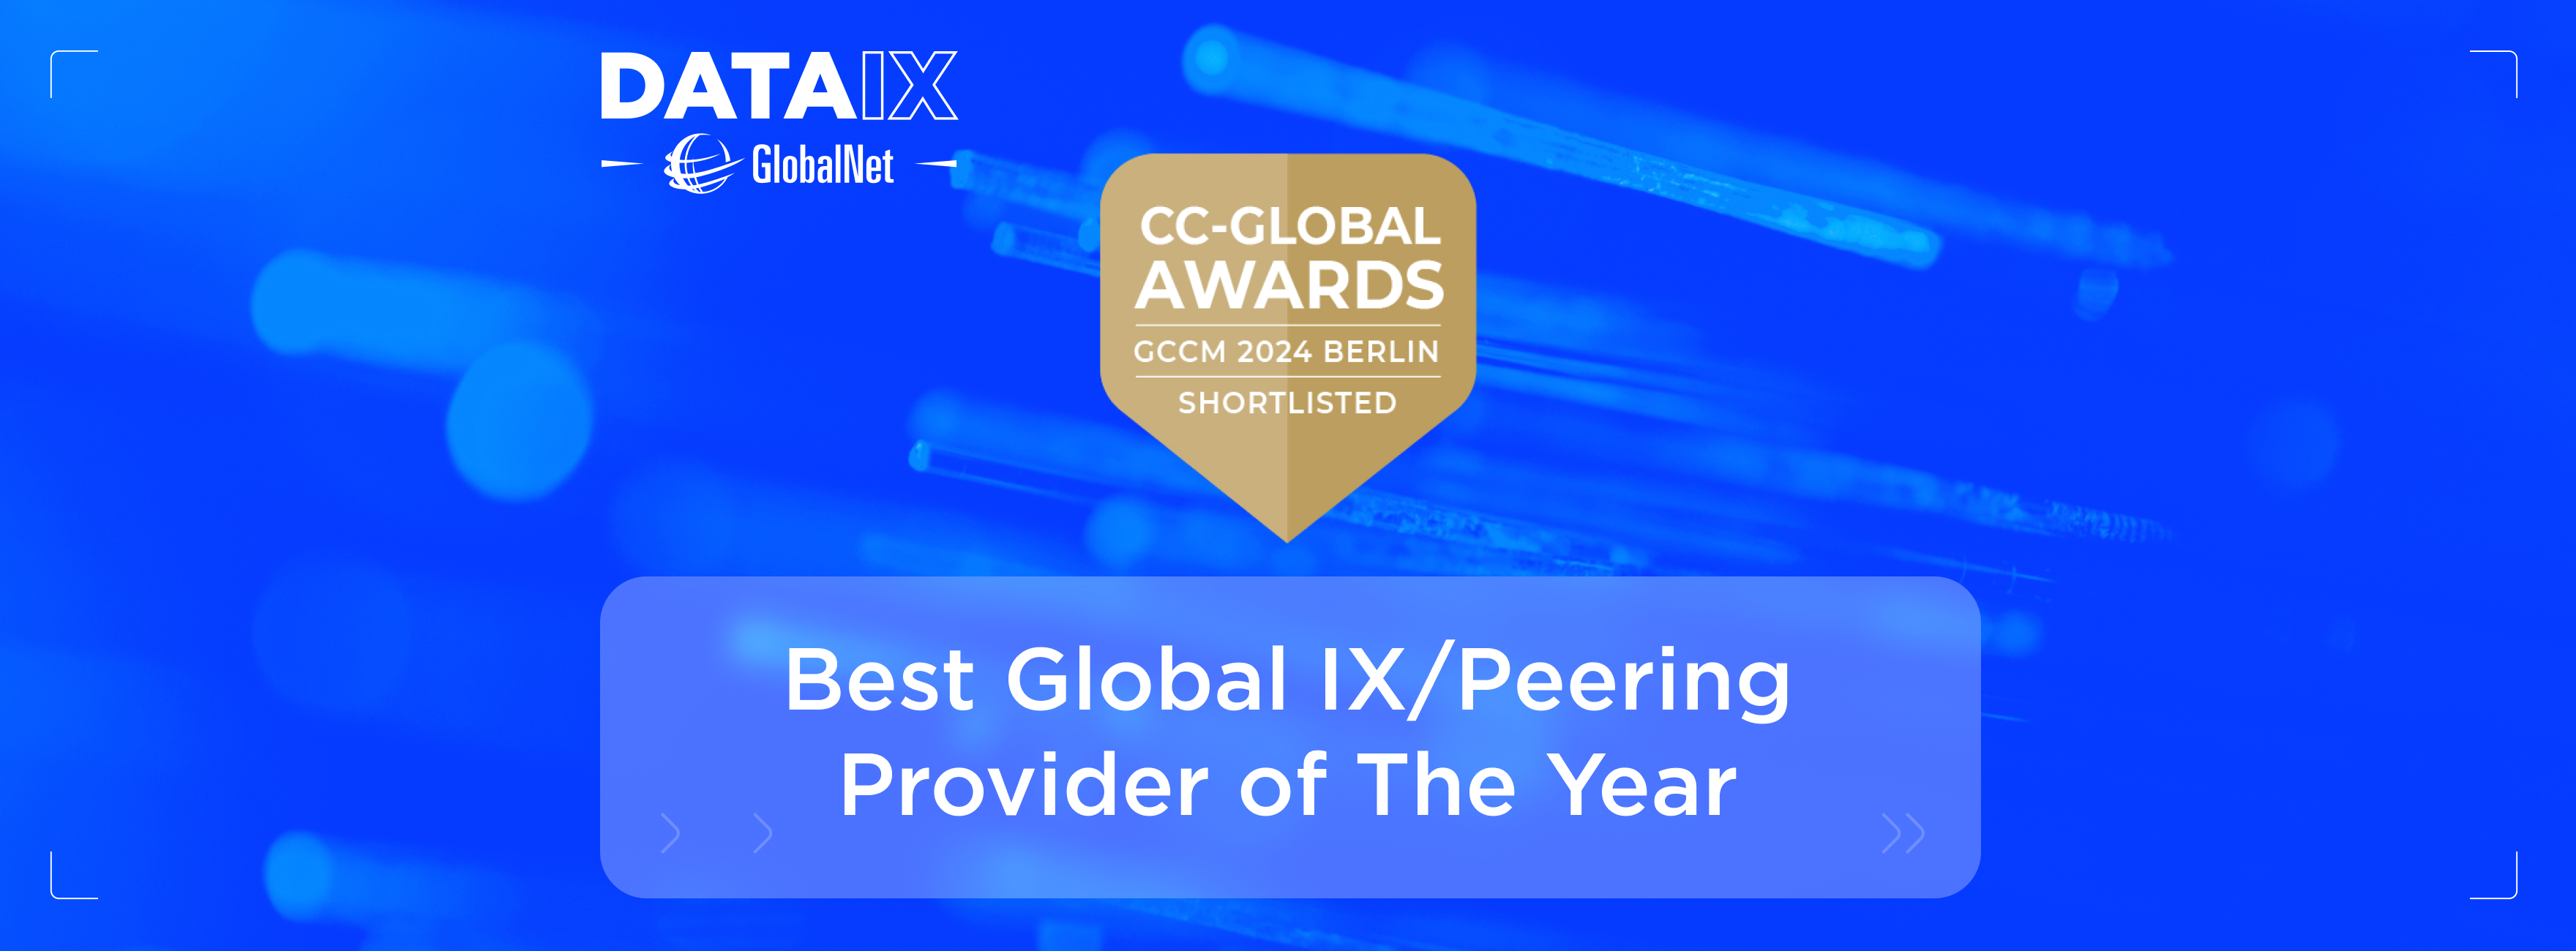 CC-Global Awards 2024: We've Been Short-Listed!